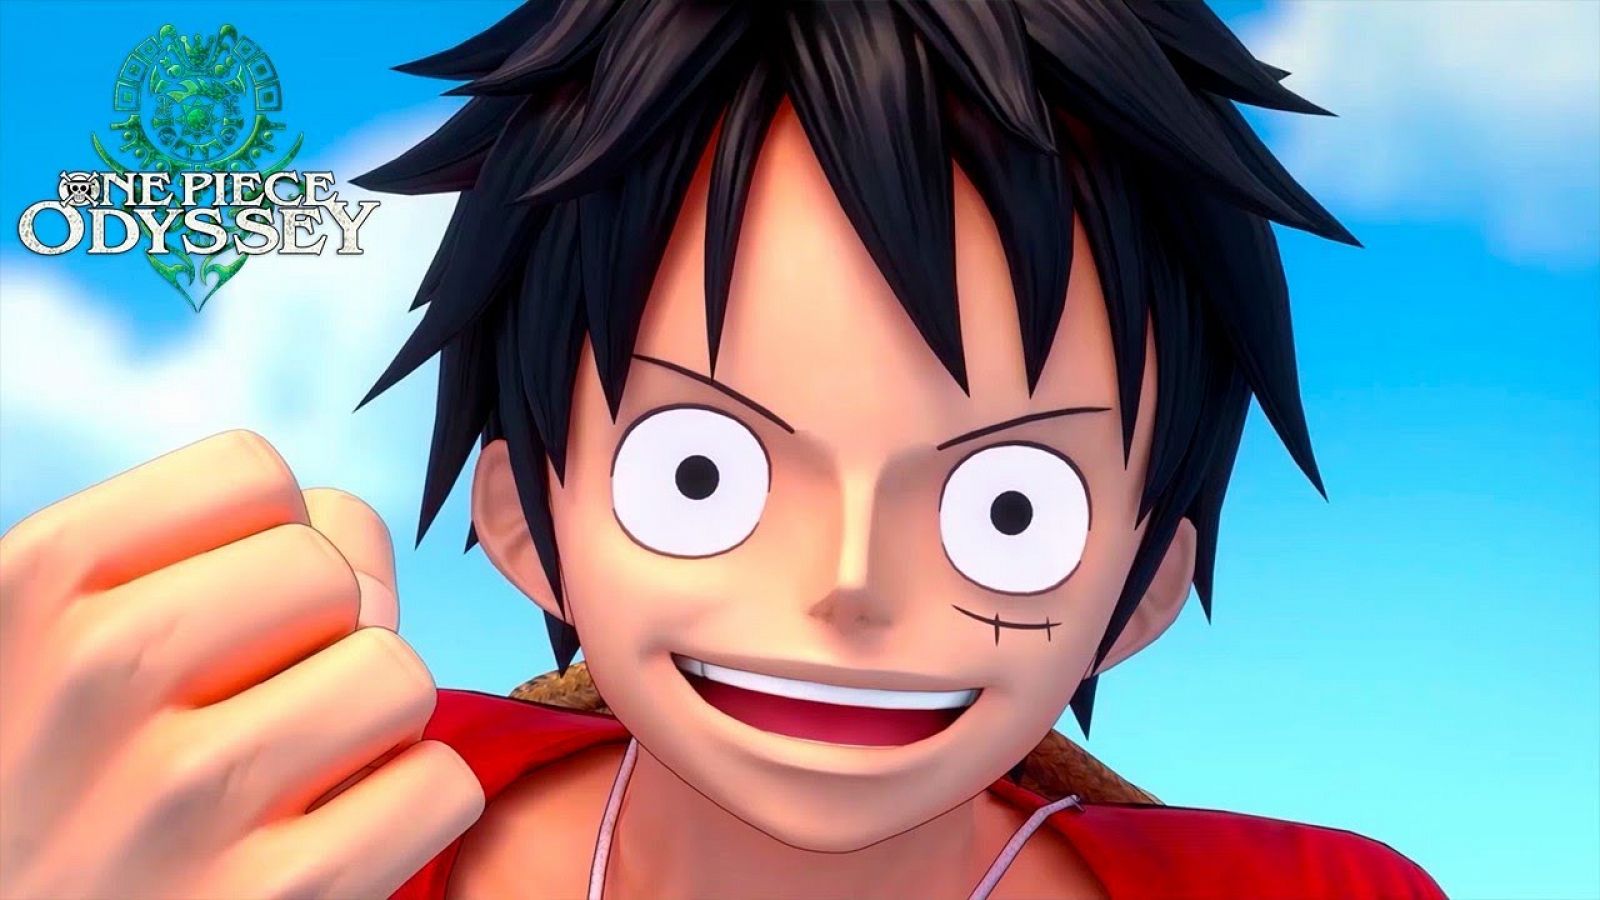 Sin programa: Trailer del videojuego 'One Piece Odyssey